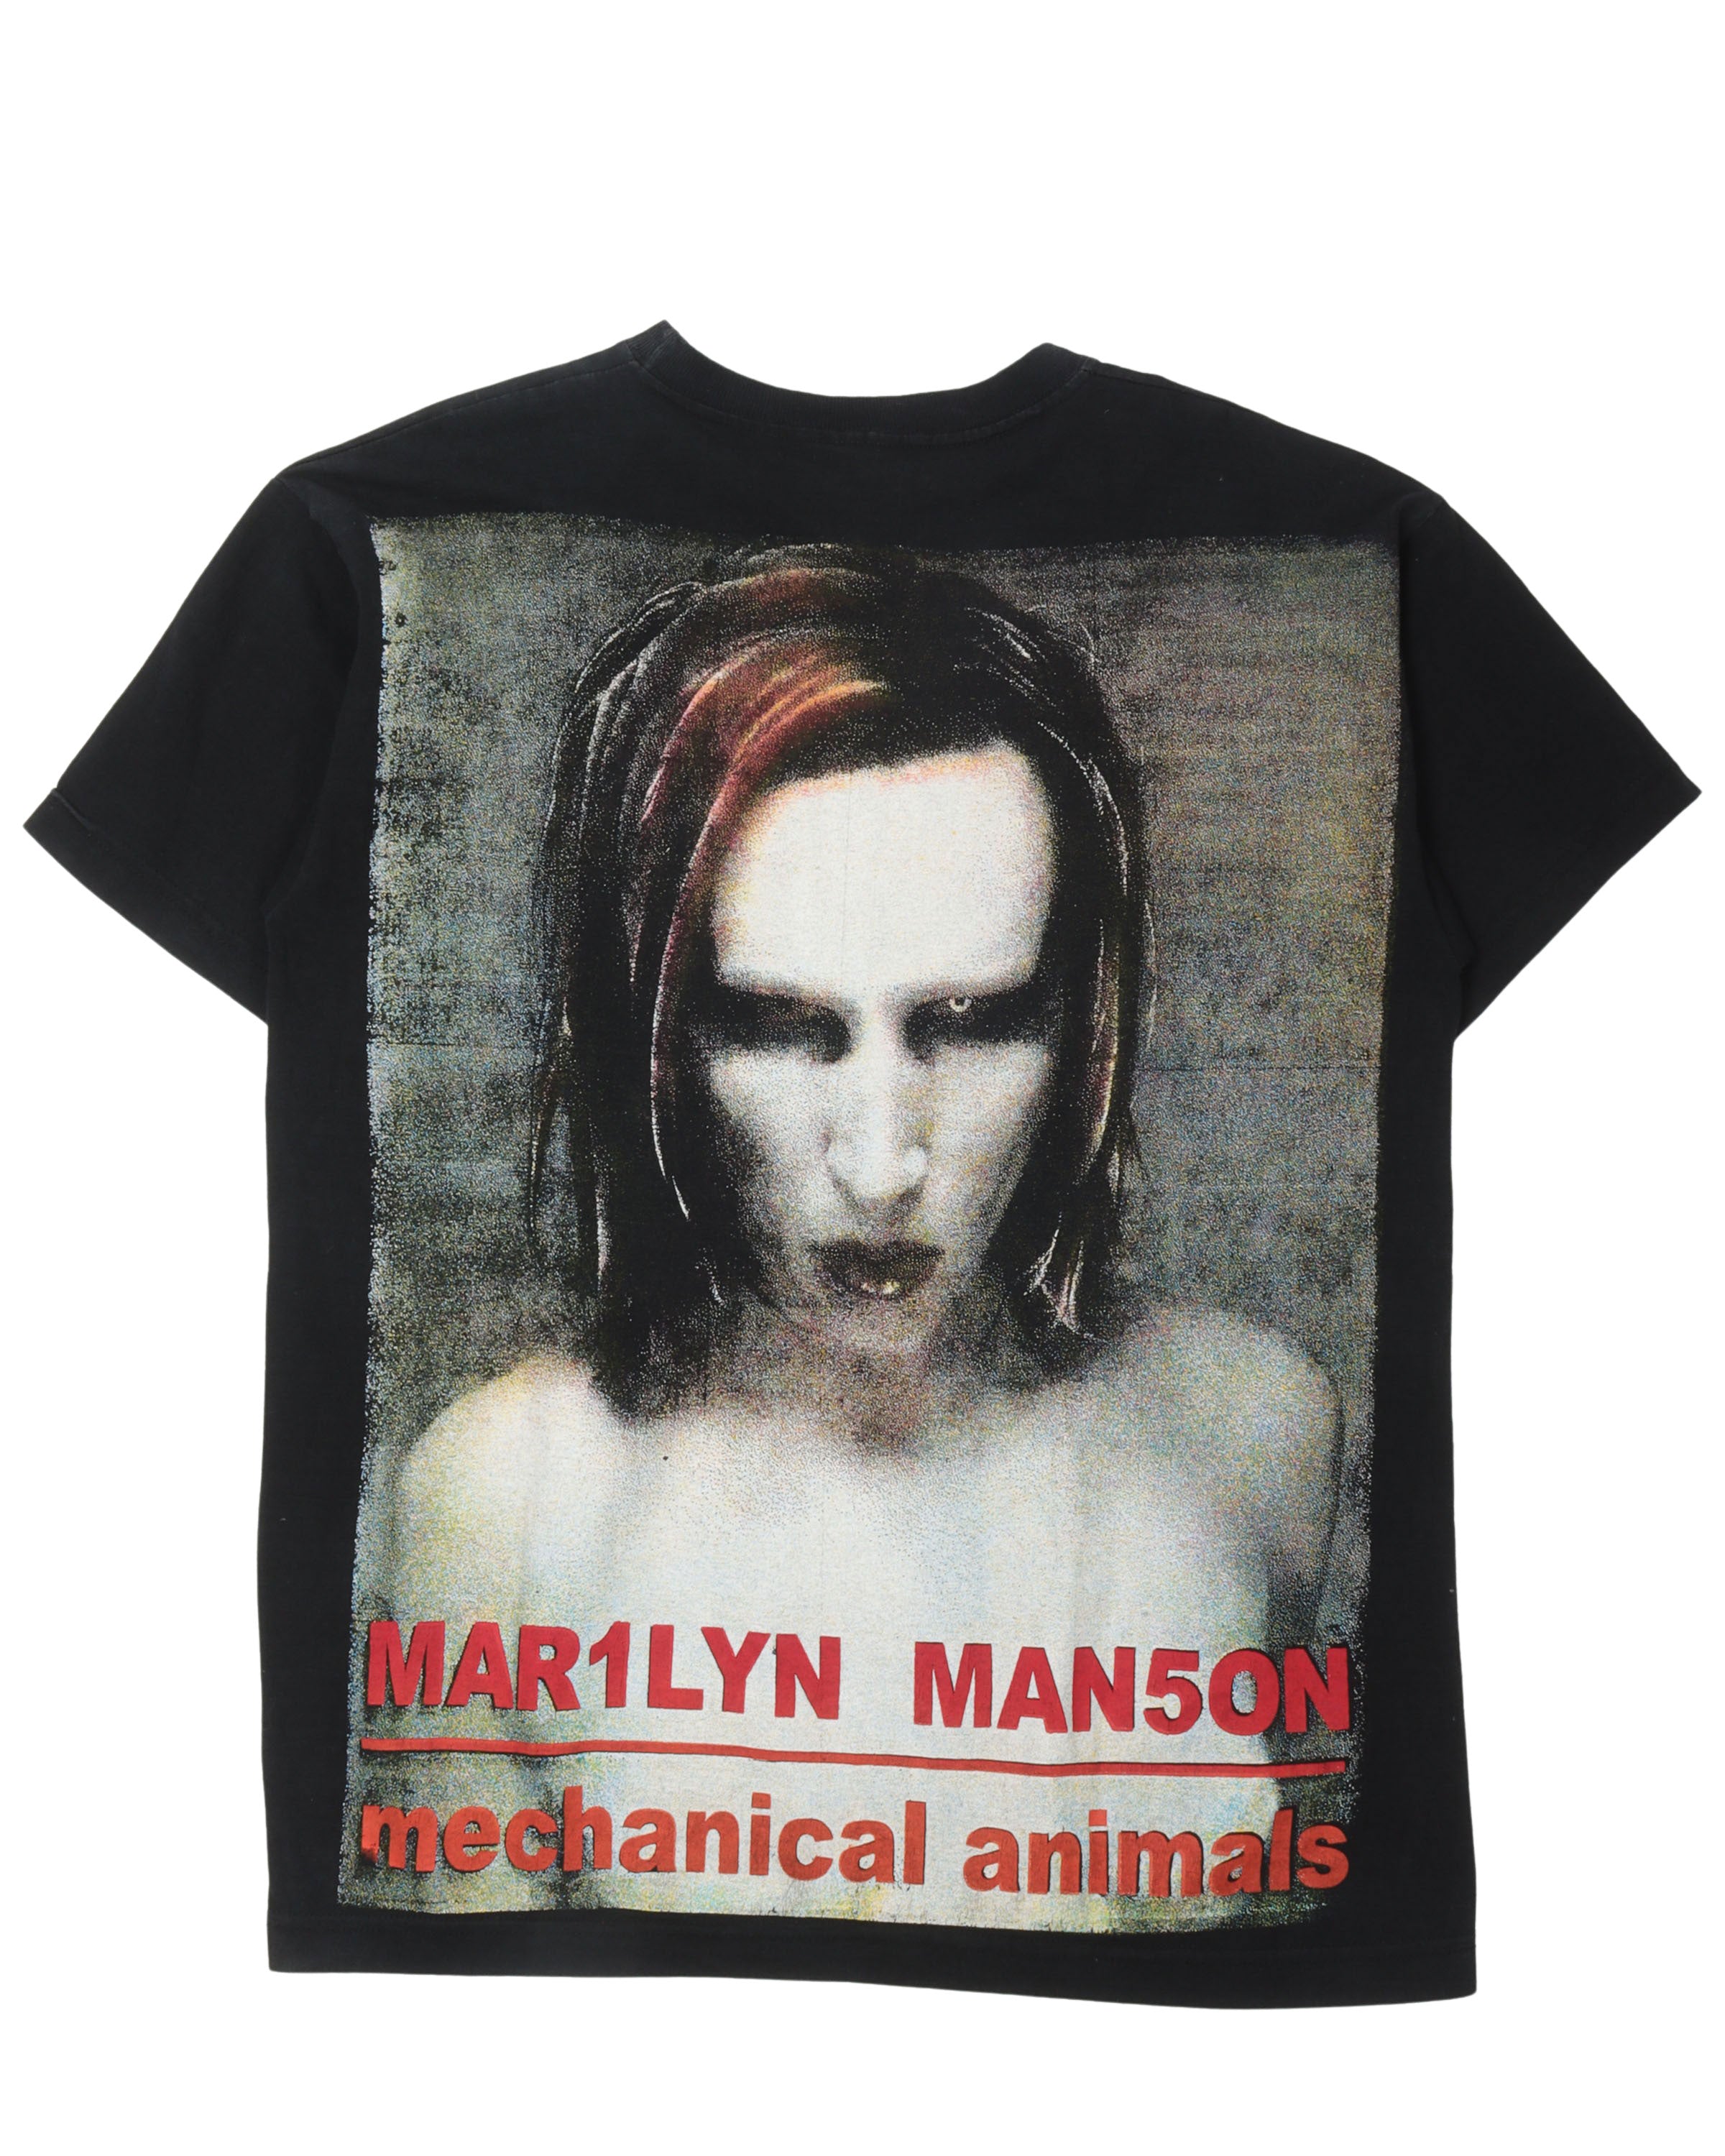 Marilyn Manson "Mechanical Animals" T-Shirt